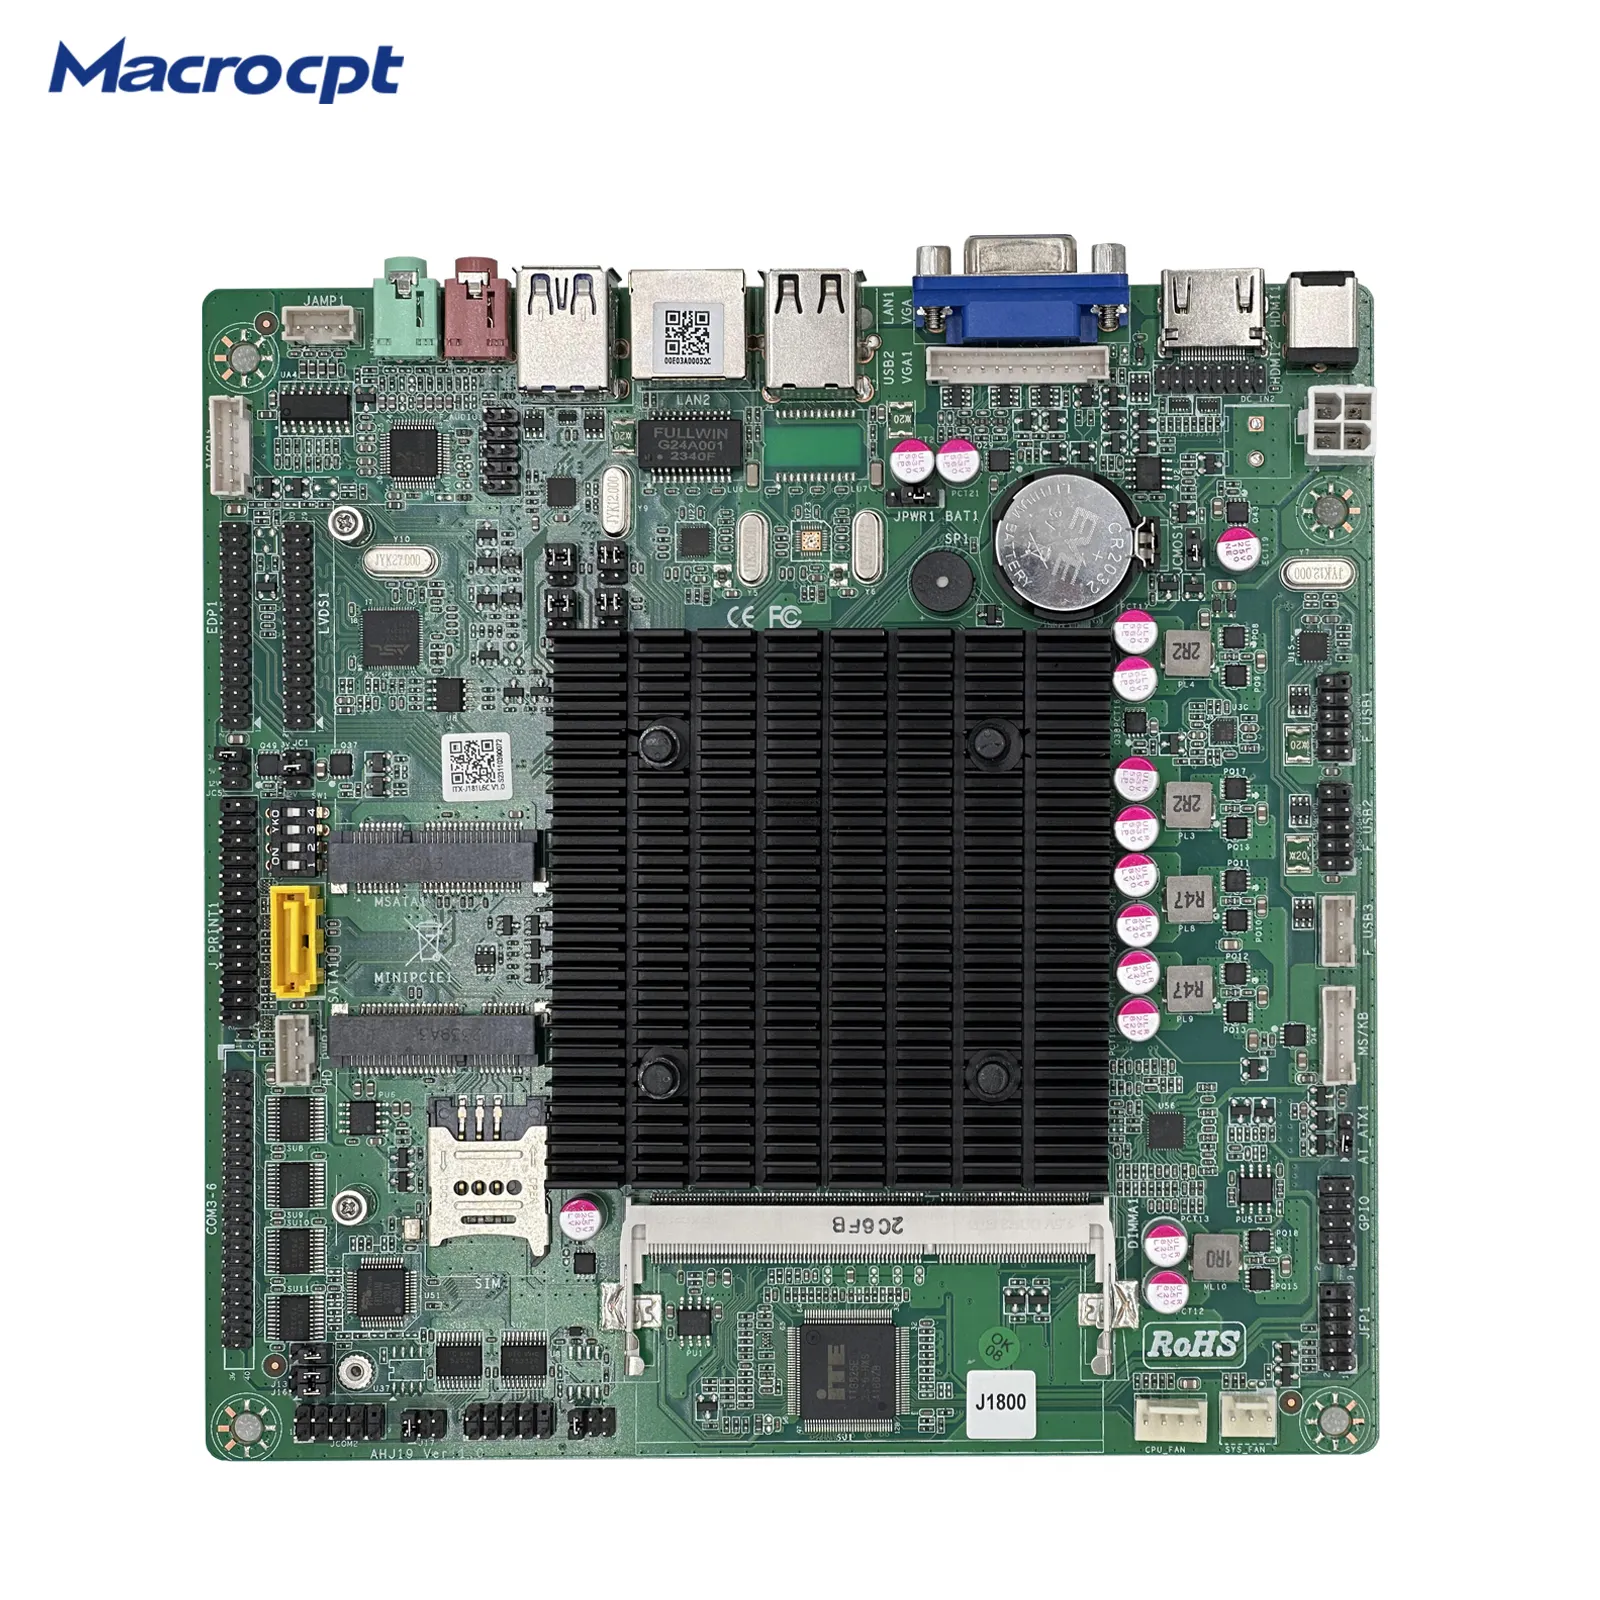 मैक्रोप्ट इंडस्ट्रियल मिनी आईटीएक्स मदरबोर्ड J1800 Intel DDR3 8GB X86 लो पावर एंबेडेड मेनबोर्ड मिनी पीसी नया डेस्कटॉप